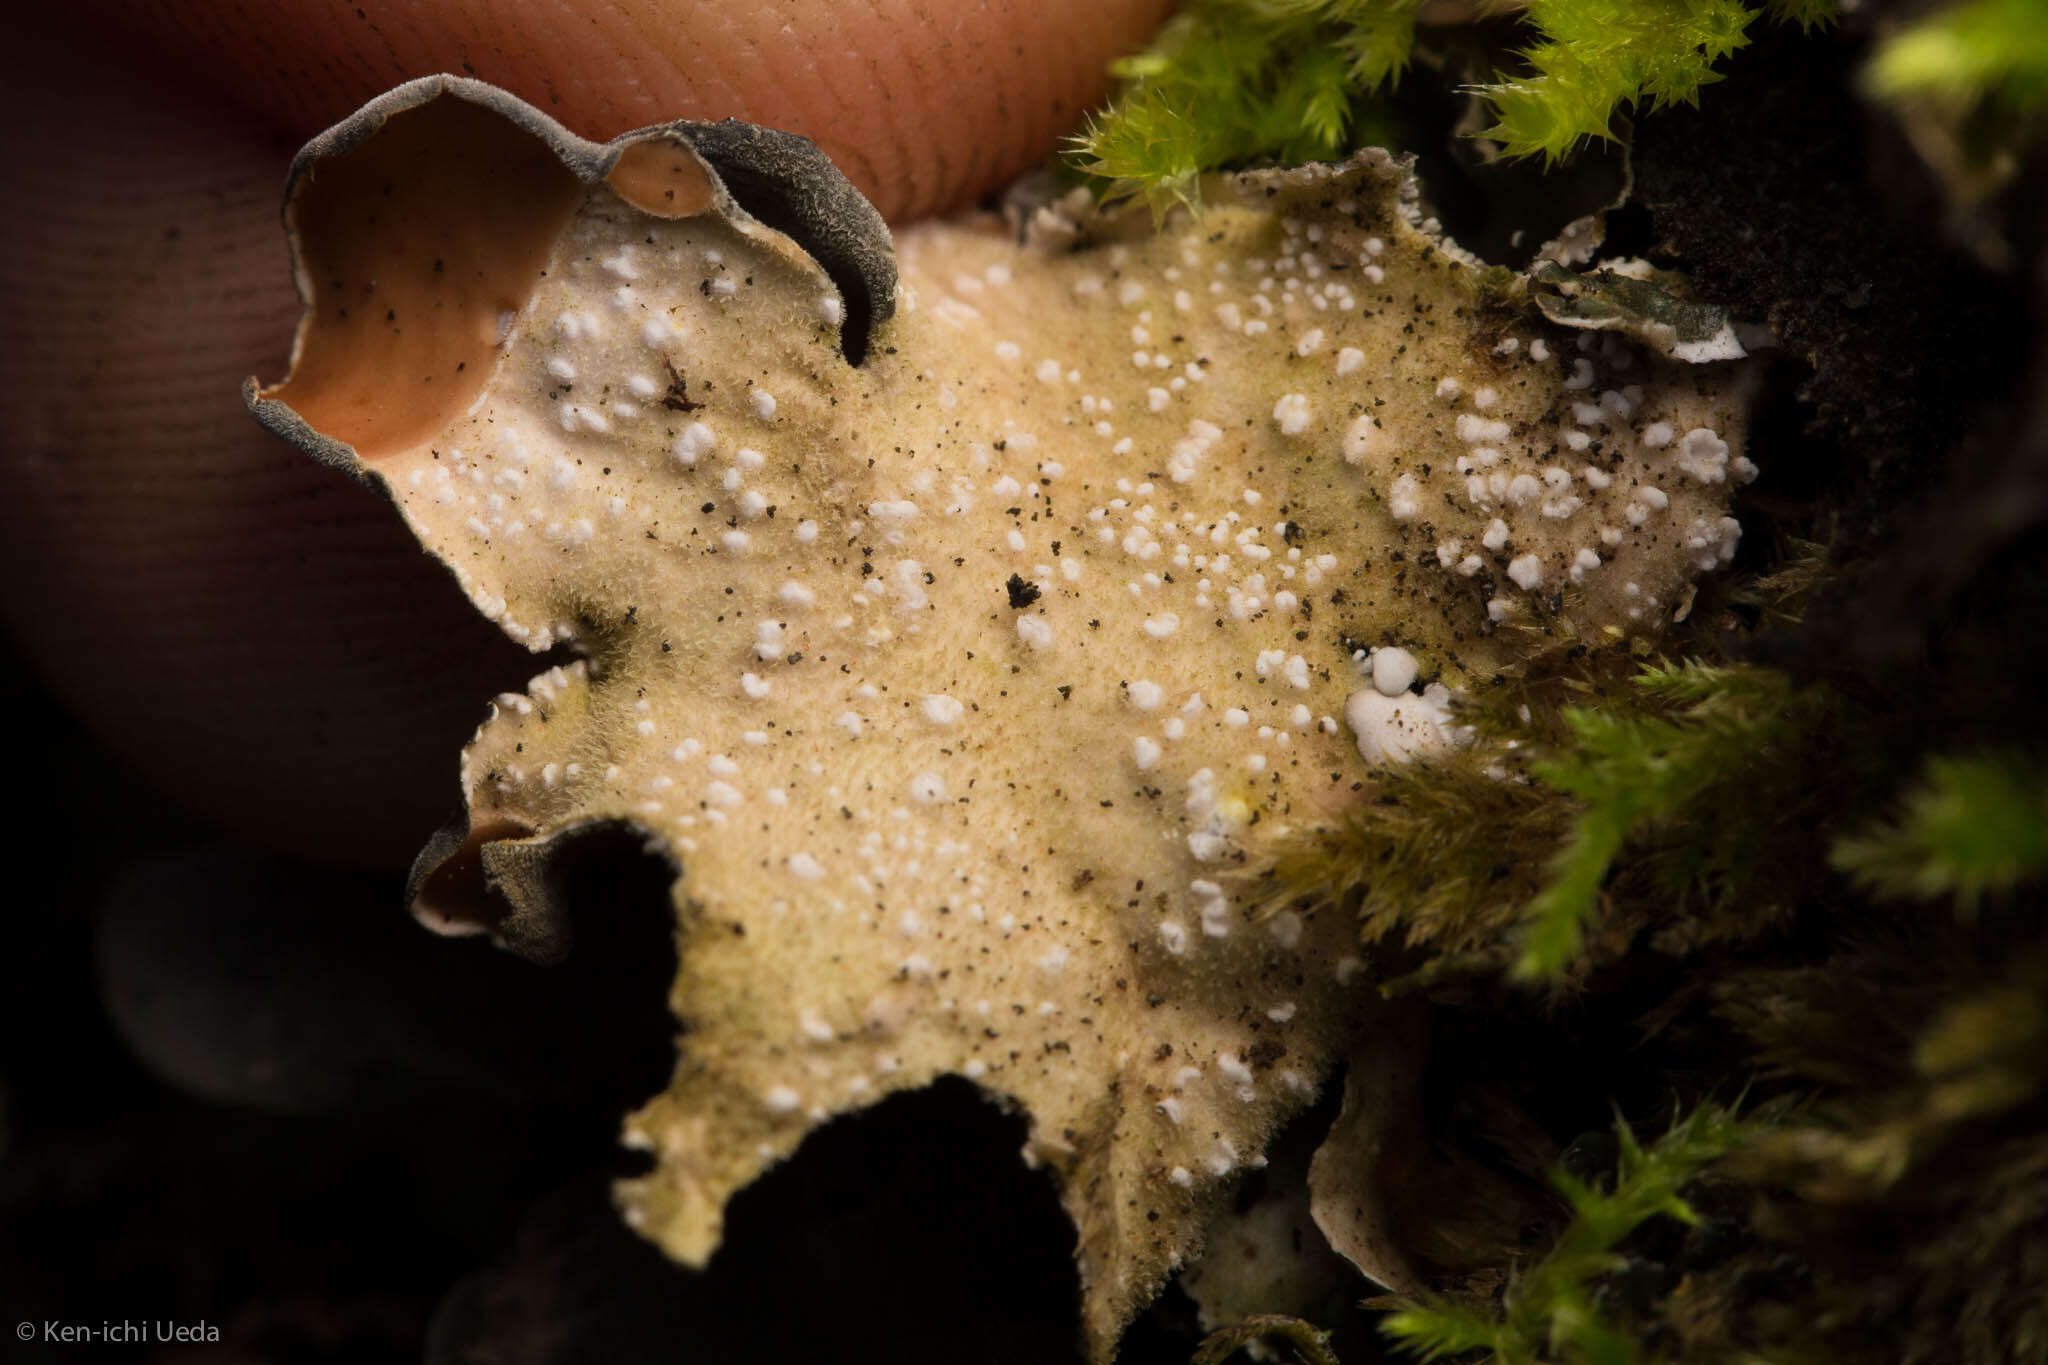 Image of Pimpled kidney lichen